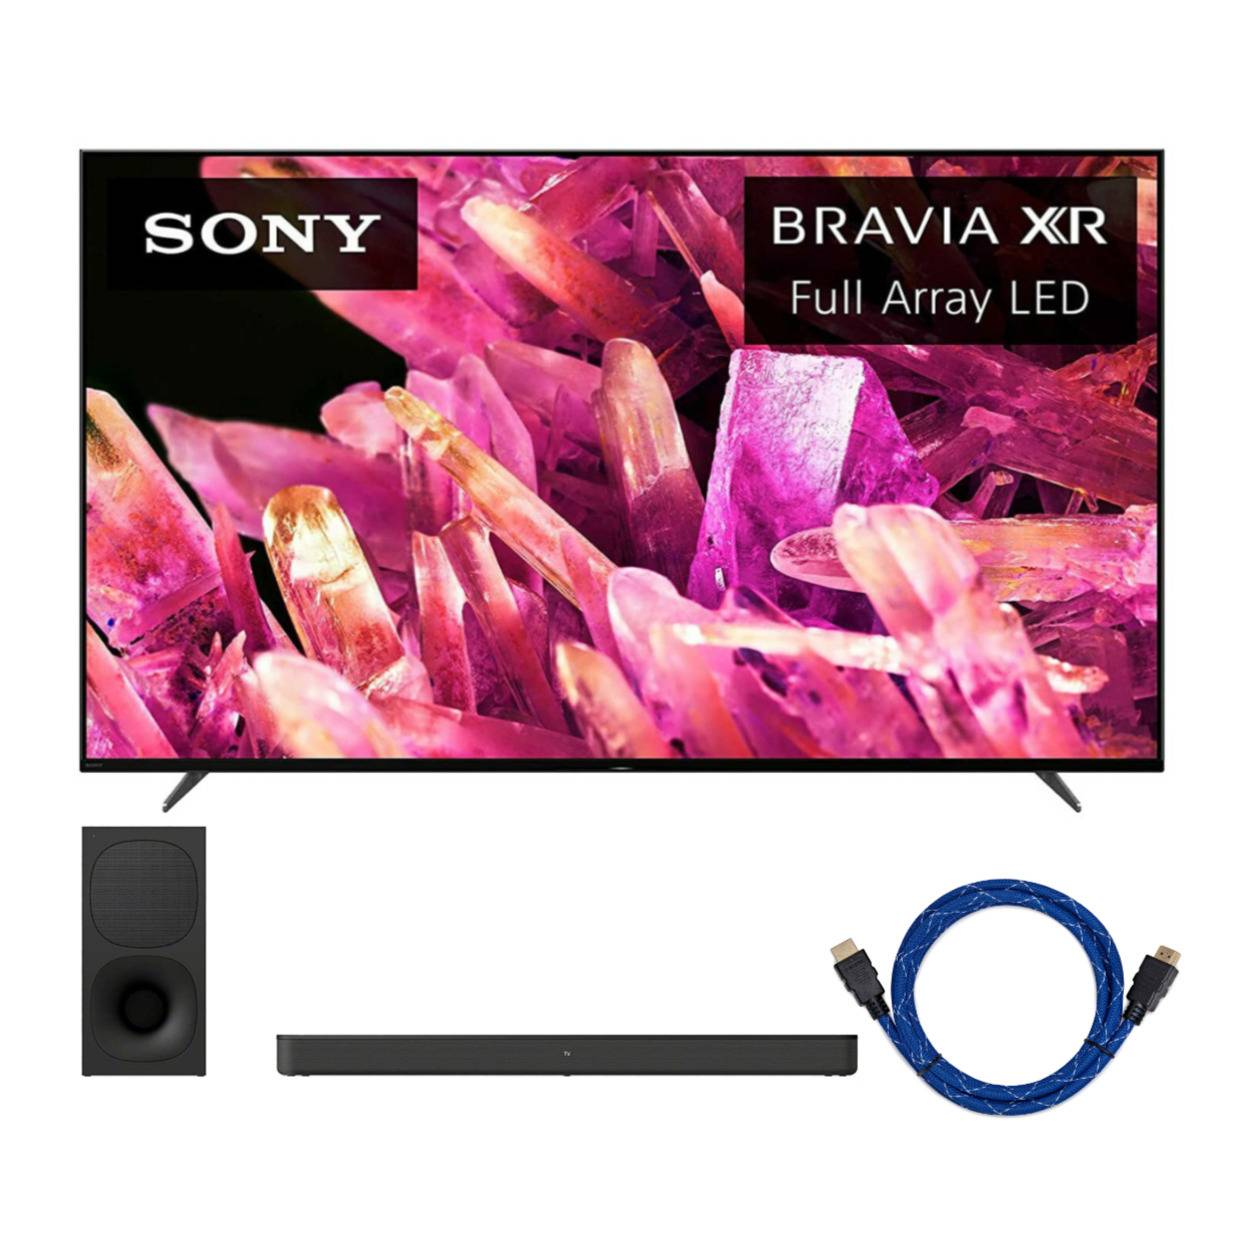 Sony BRAVIA XR X90K 4K HDR Full Array LED TV with Smart Google TV (55-Inch) Bundle